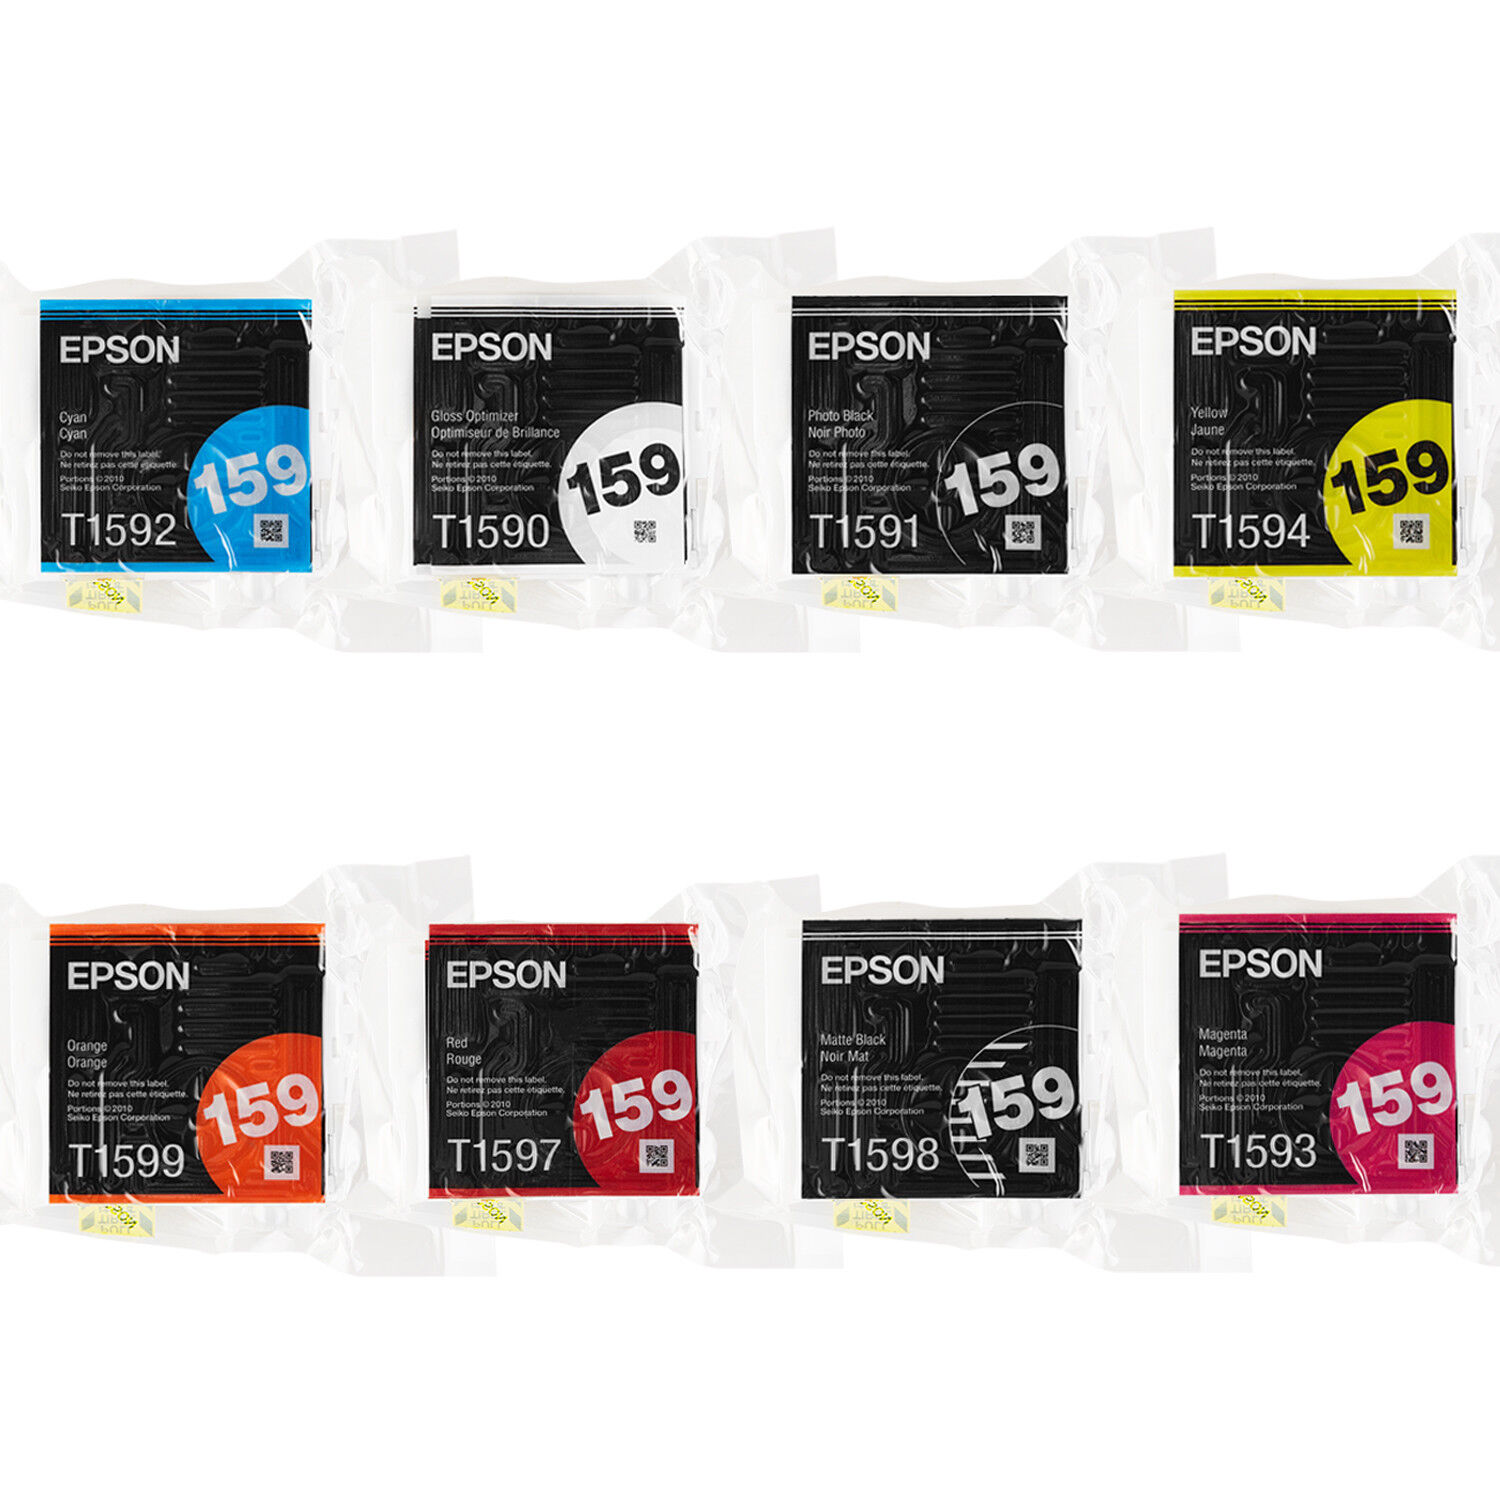 New EPSON R2000 T159 Series complete set 8pcs Printer Ink Cartridges New sealed